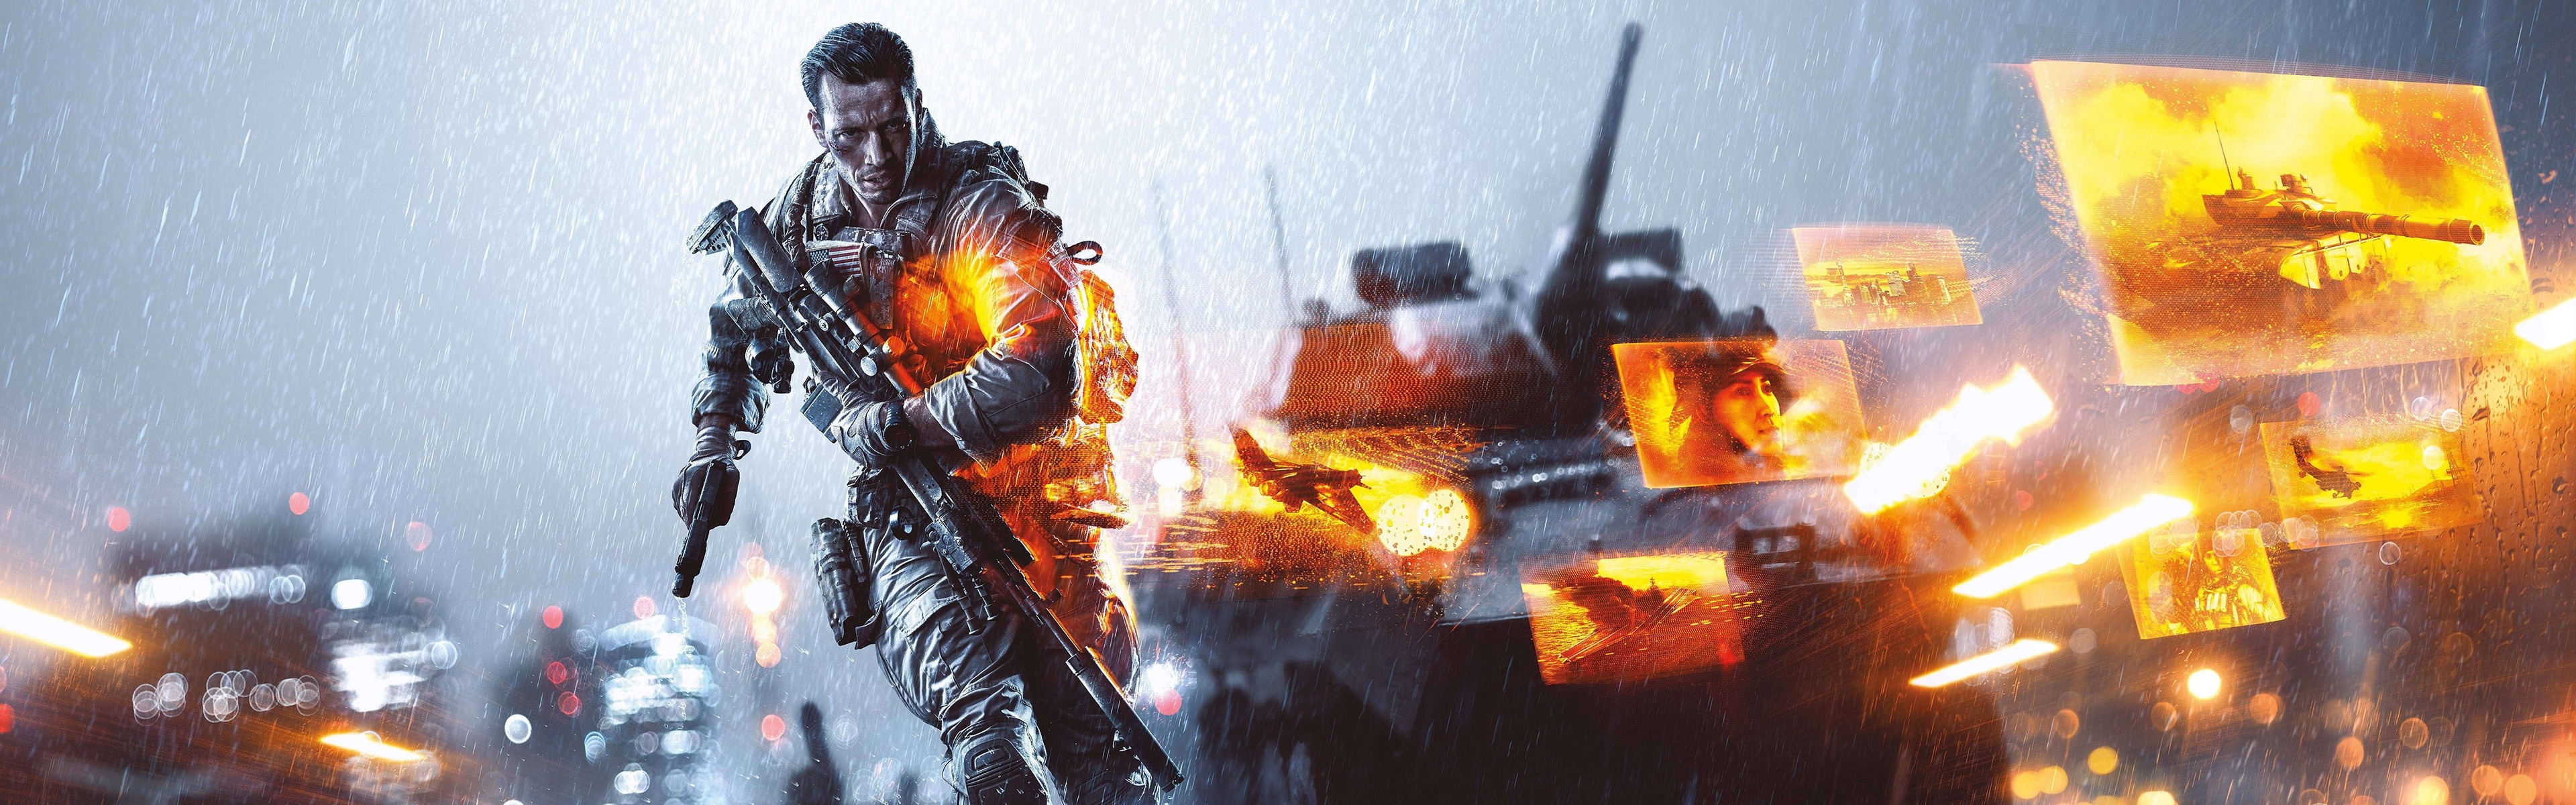 Assault rifle, Battlefield Hardline, Military game, Rainy atmosphere, 3840x1200 Dual Screen Desktop